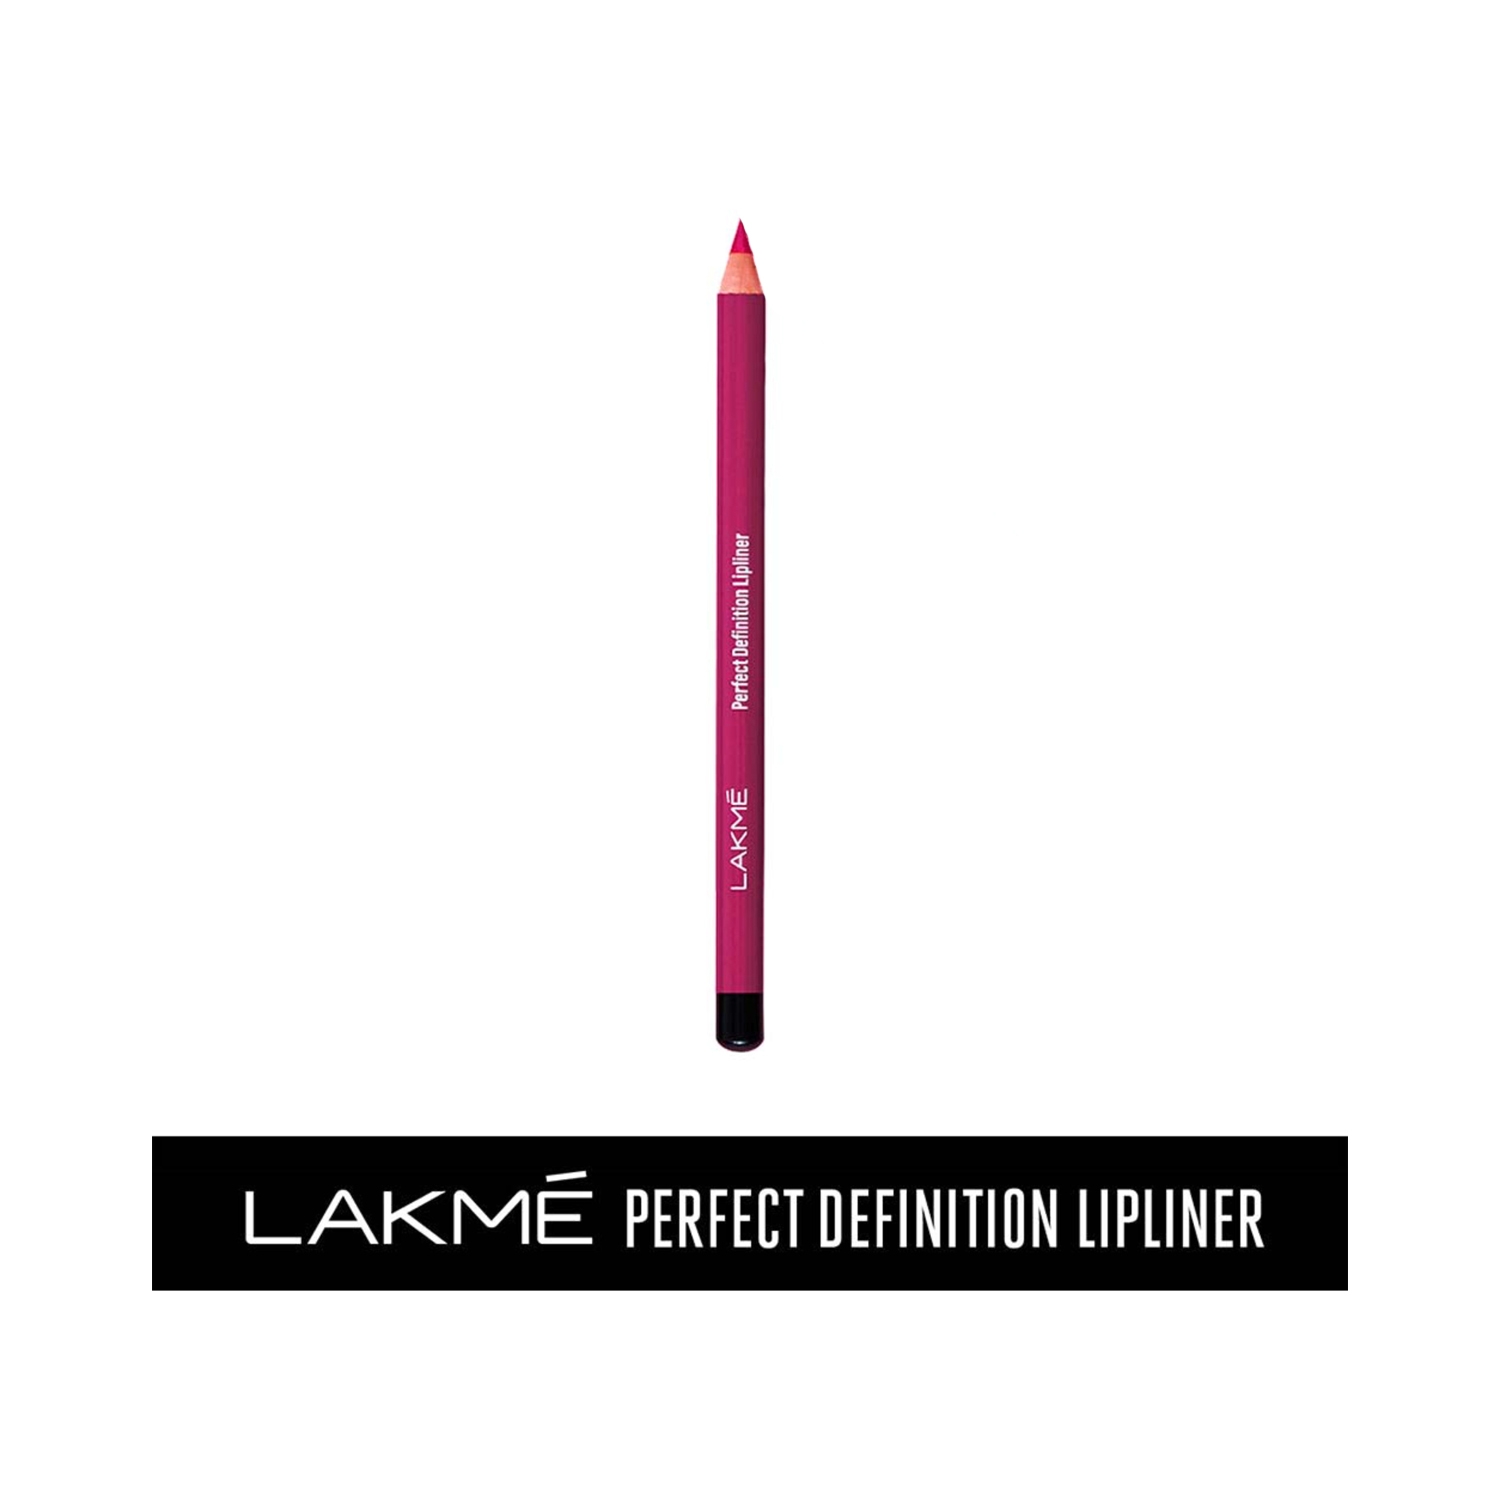 Lakme | Lakme Perfect Definition Lip Liner - Strawberry Pie (0.78g)